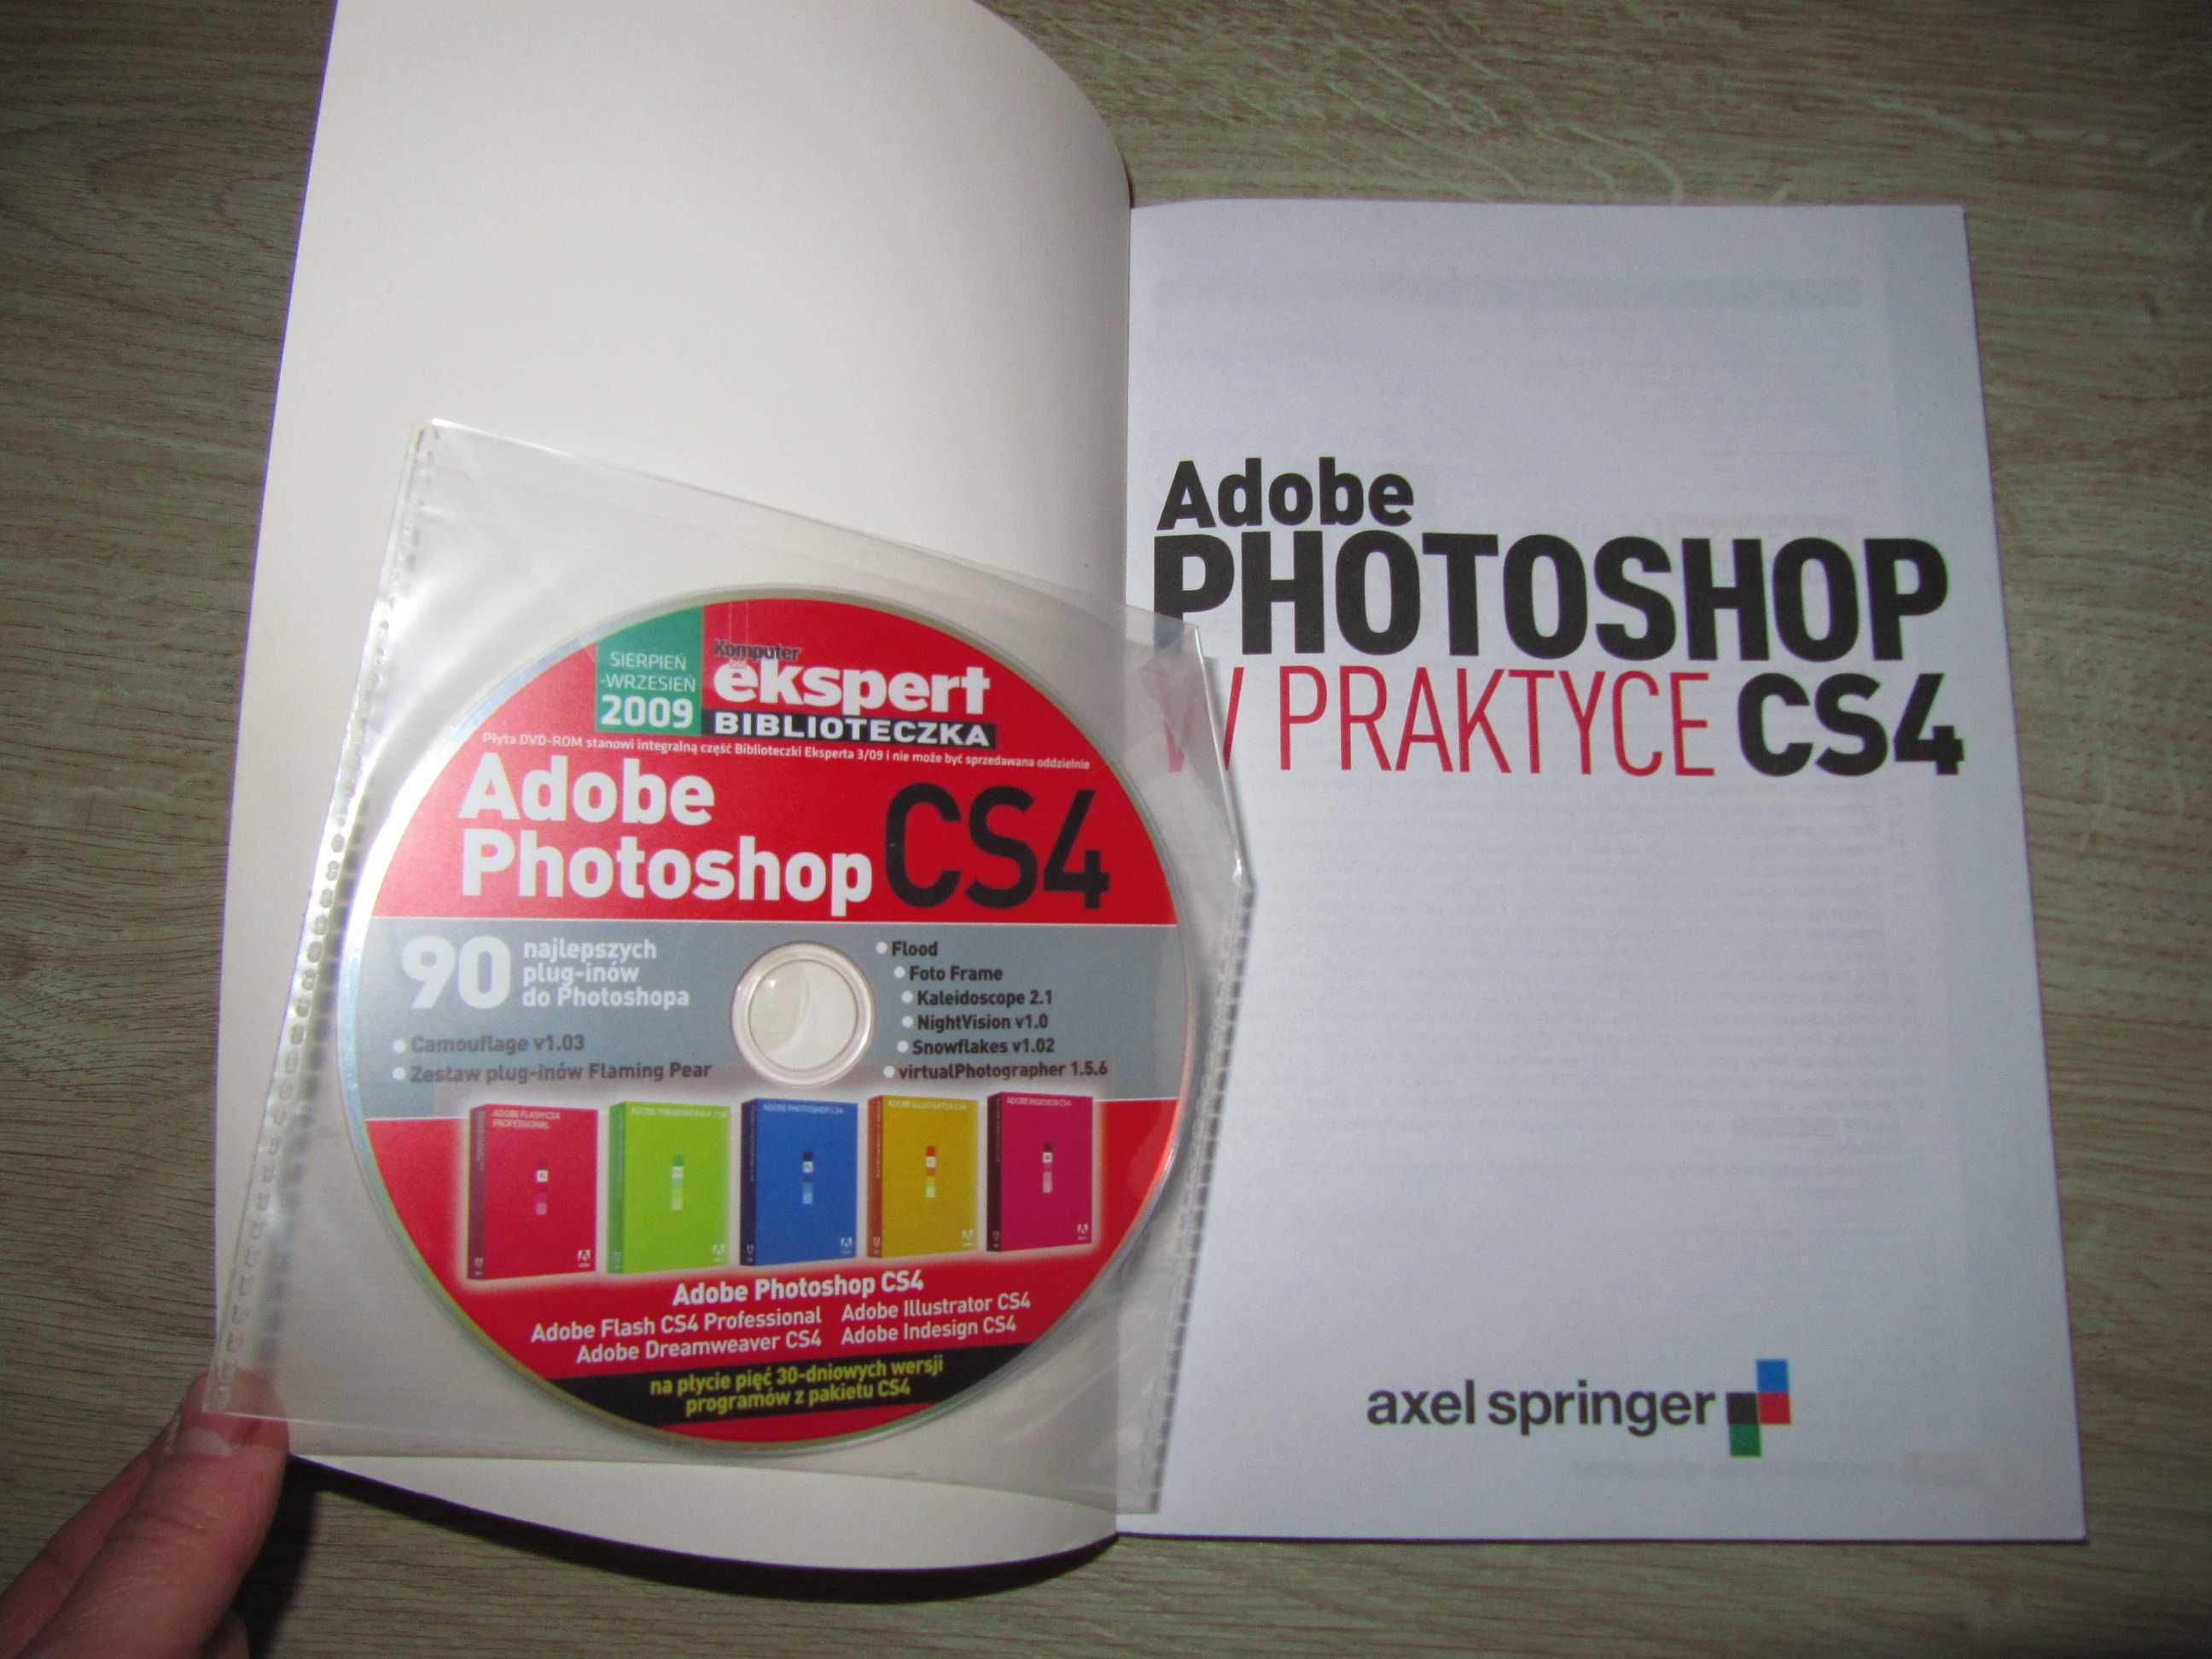 Adobe Photoshop w praktyce CS4. Komputer ekspert biblioteczka + DVD